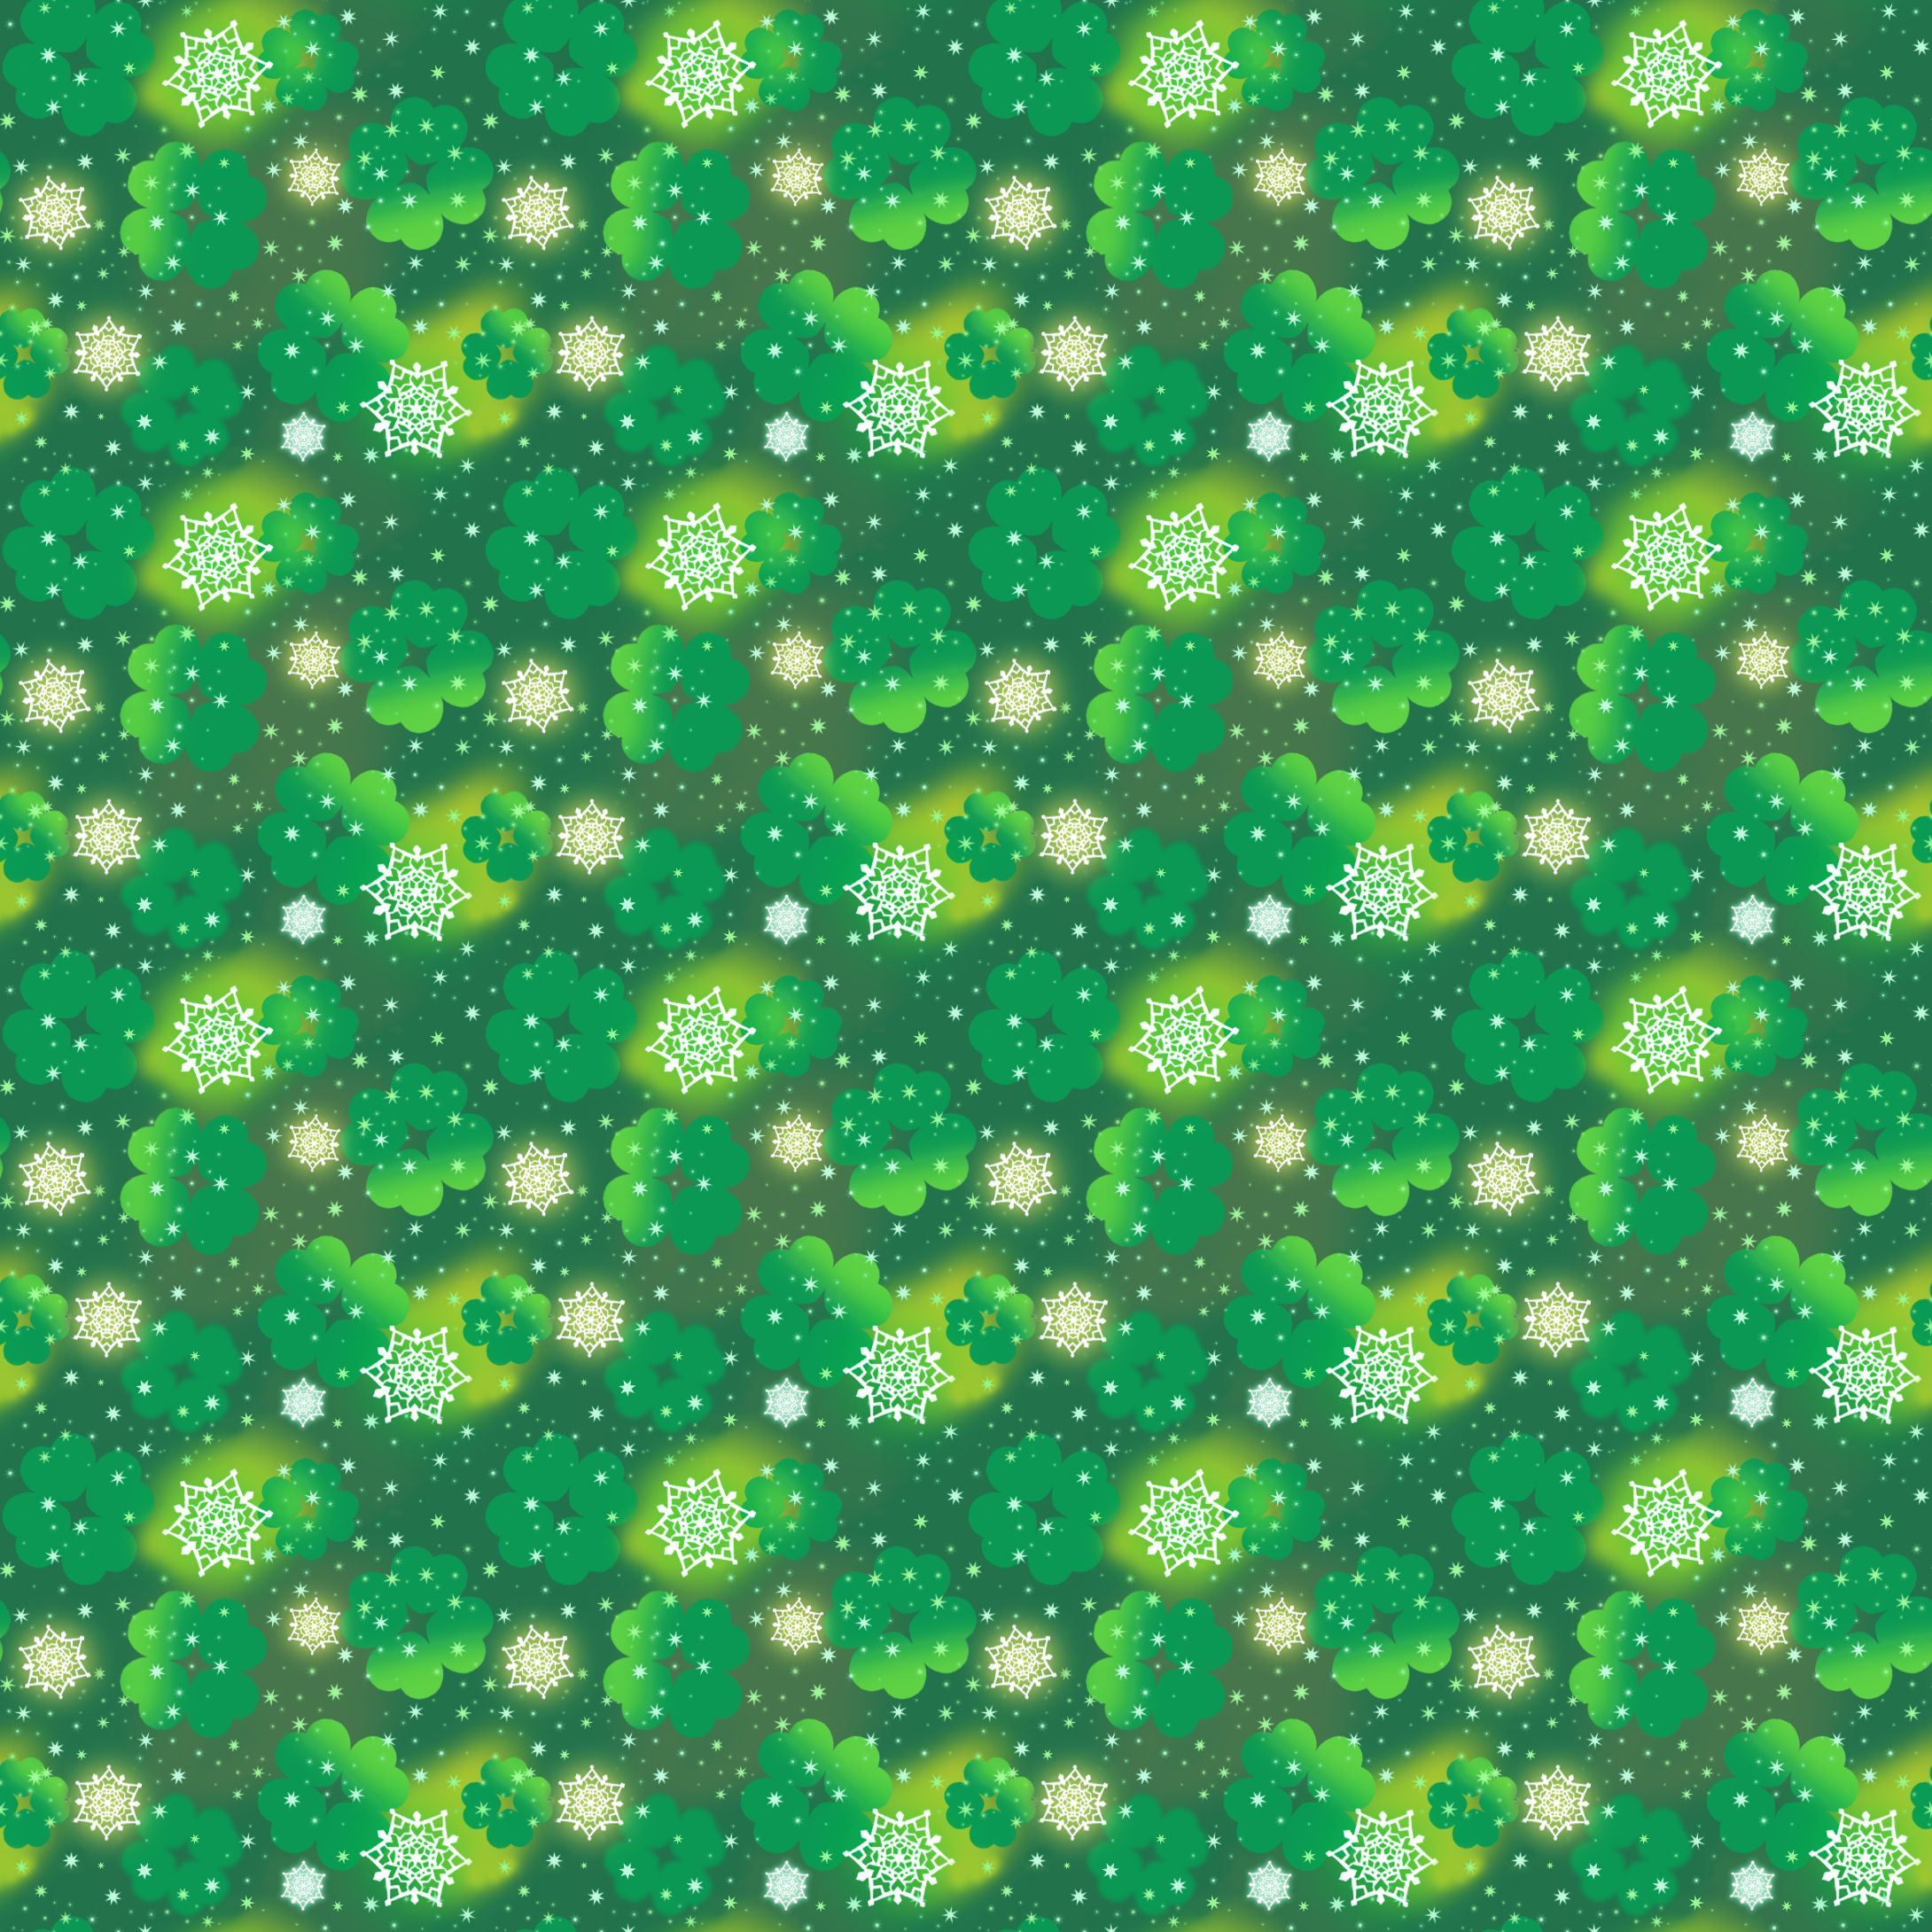 textures, snowflakes, patterns, green, texture, clover 32K